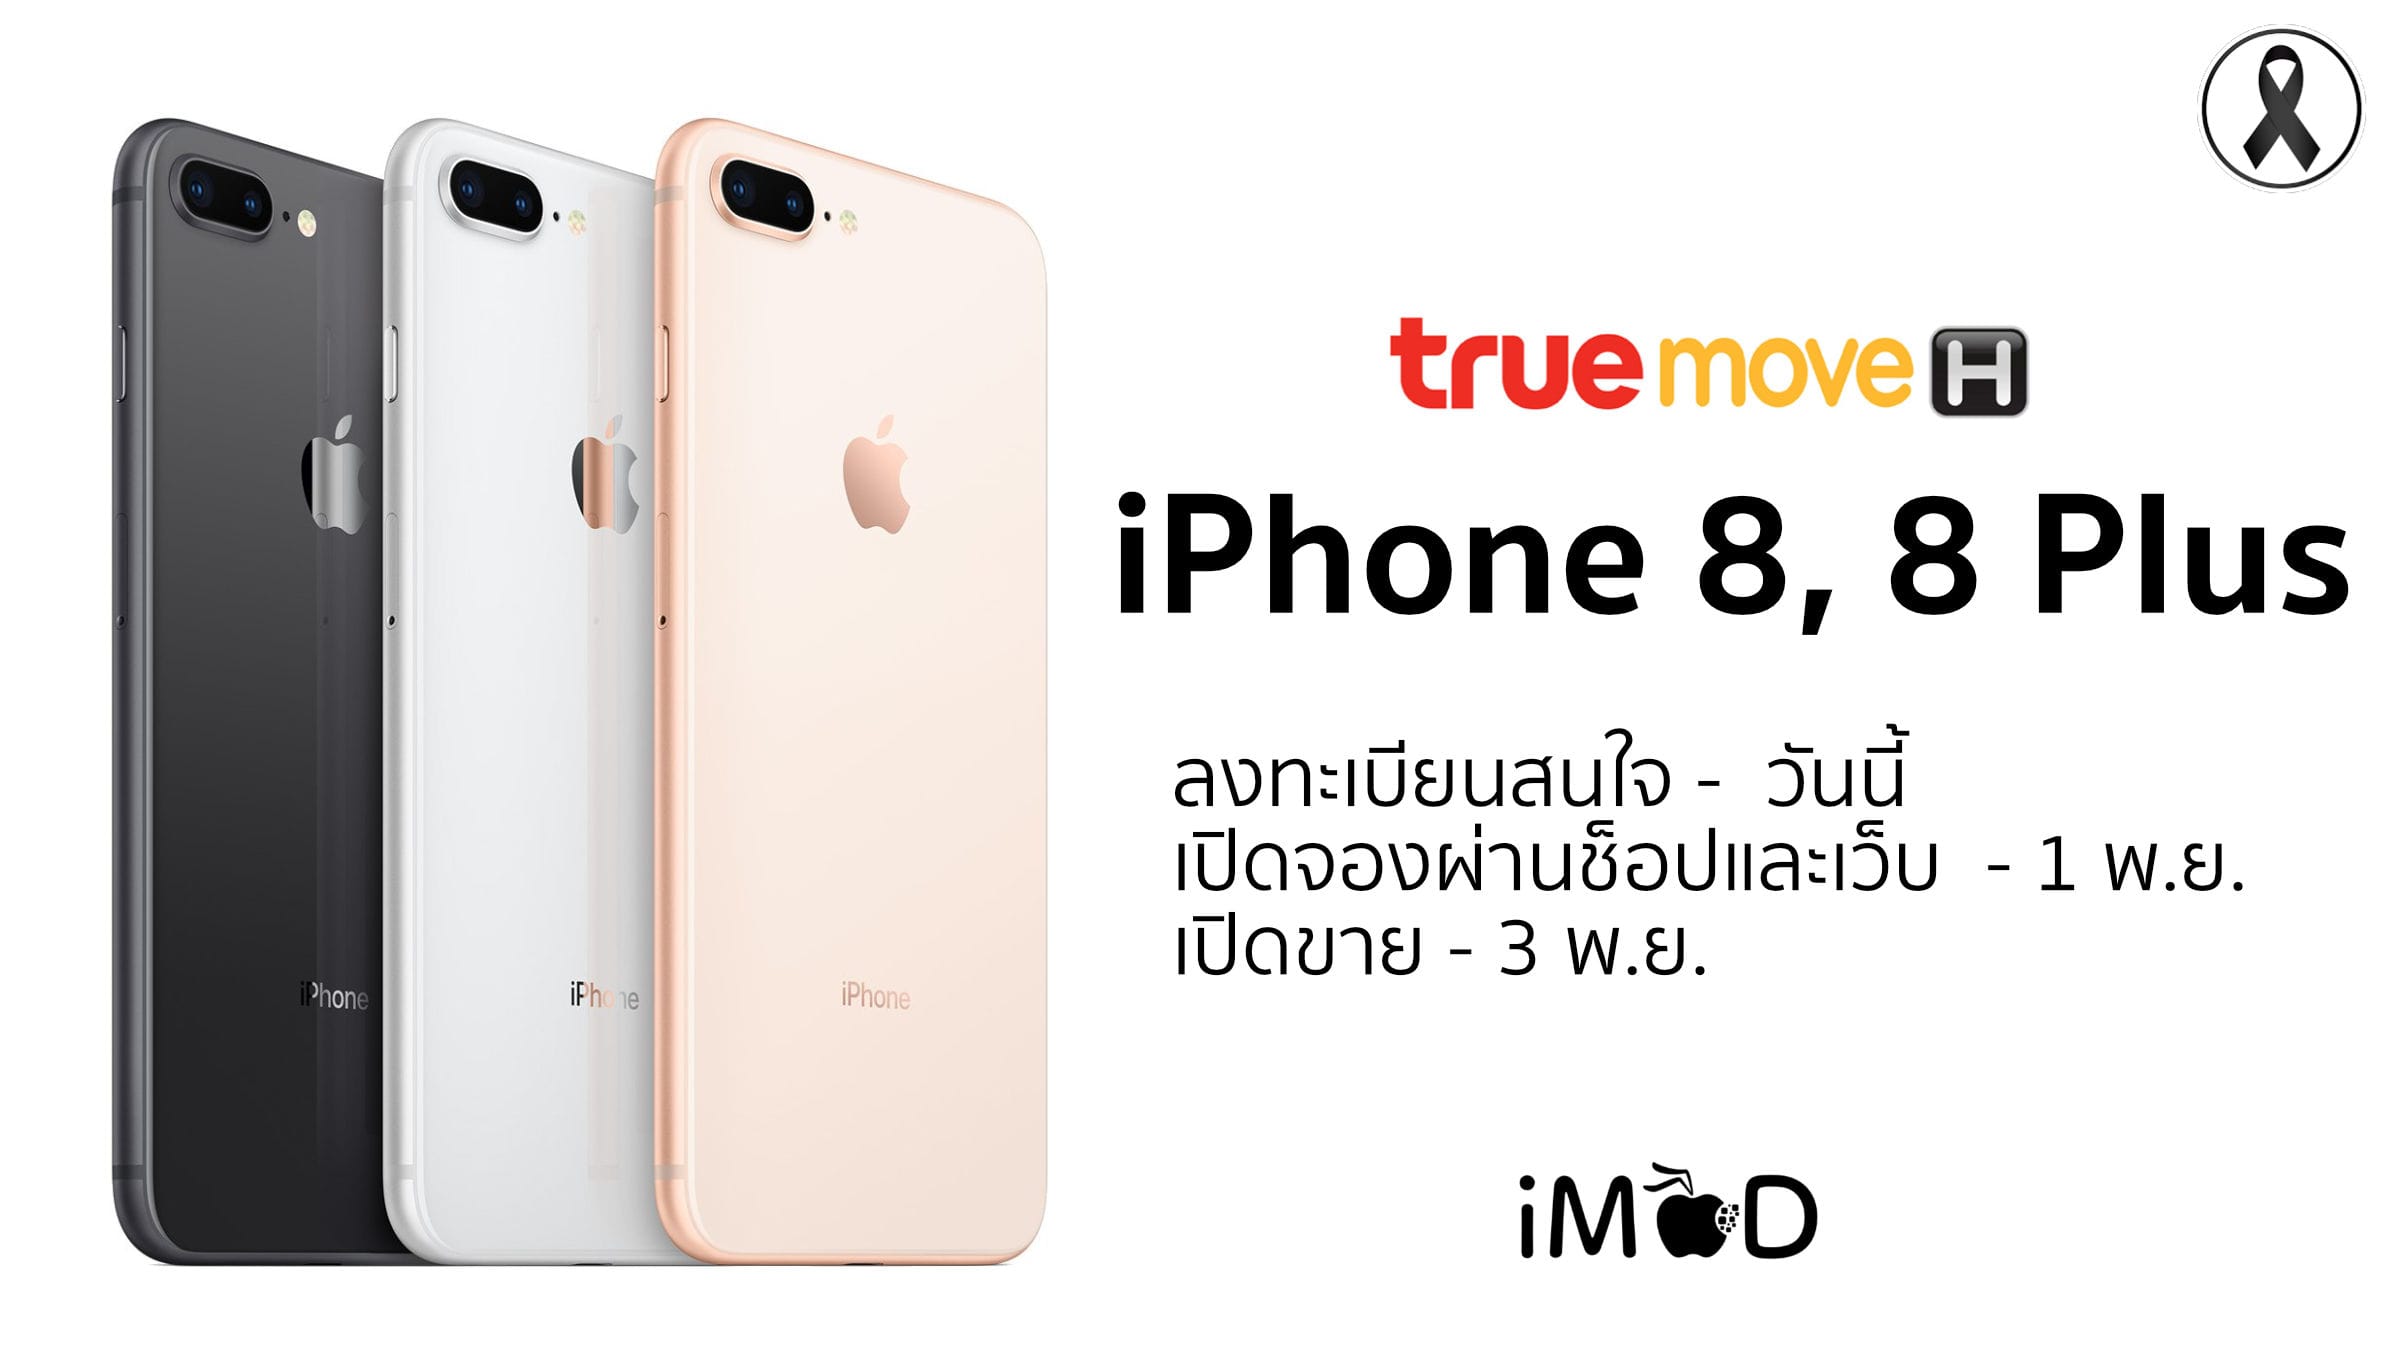 TrueMove H เปิดลงทะเบียนสนใจซื้อ iPhone 8 และพร้อมให้จอง